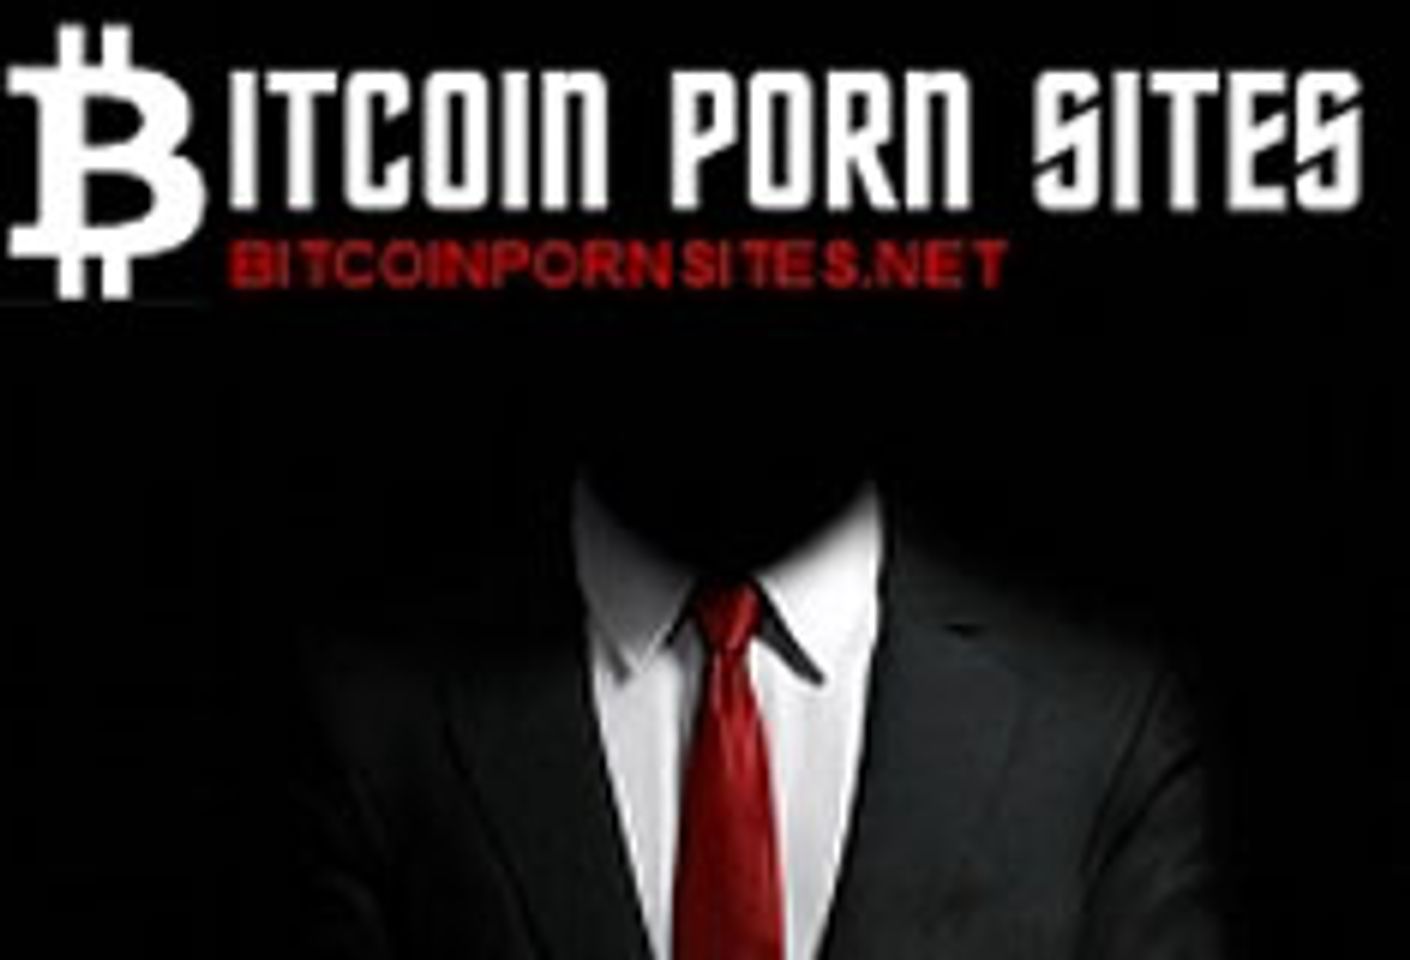 Portal Site BitcoinPornSites.net Debuts